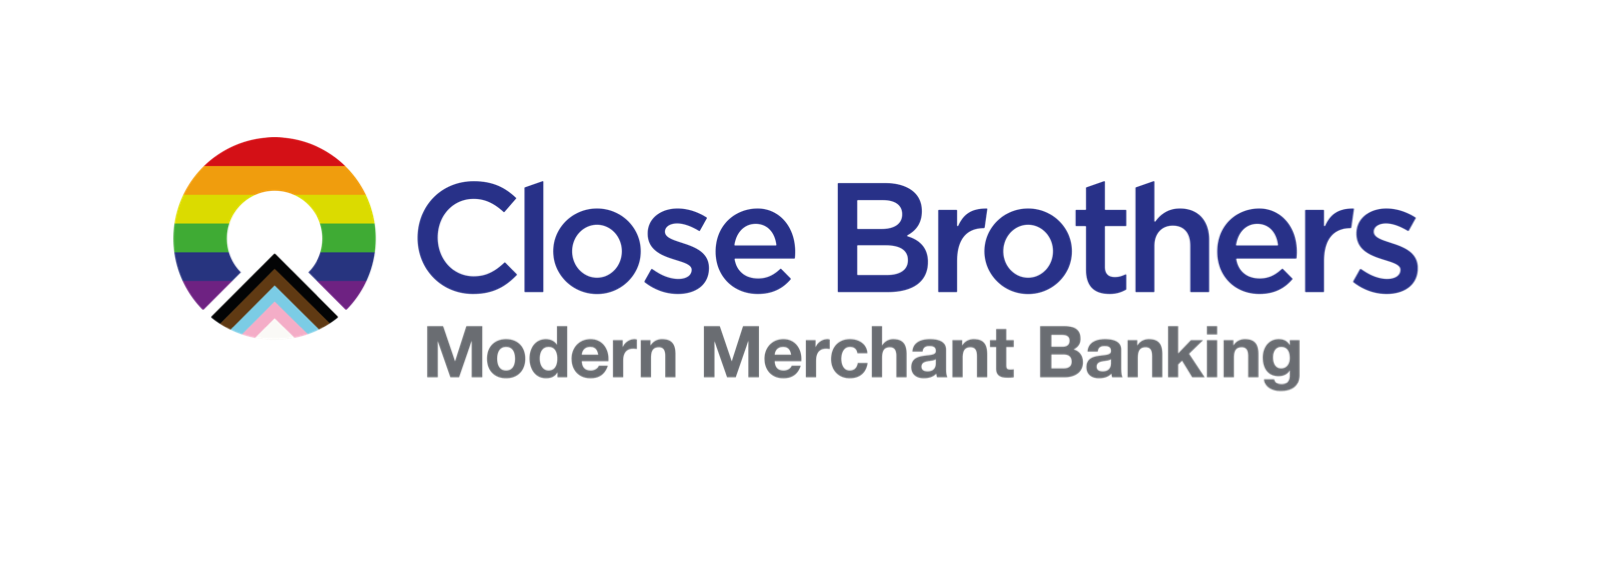 Close Brothers - Modern Merchant Banking